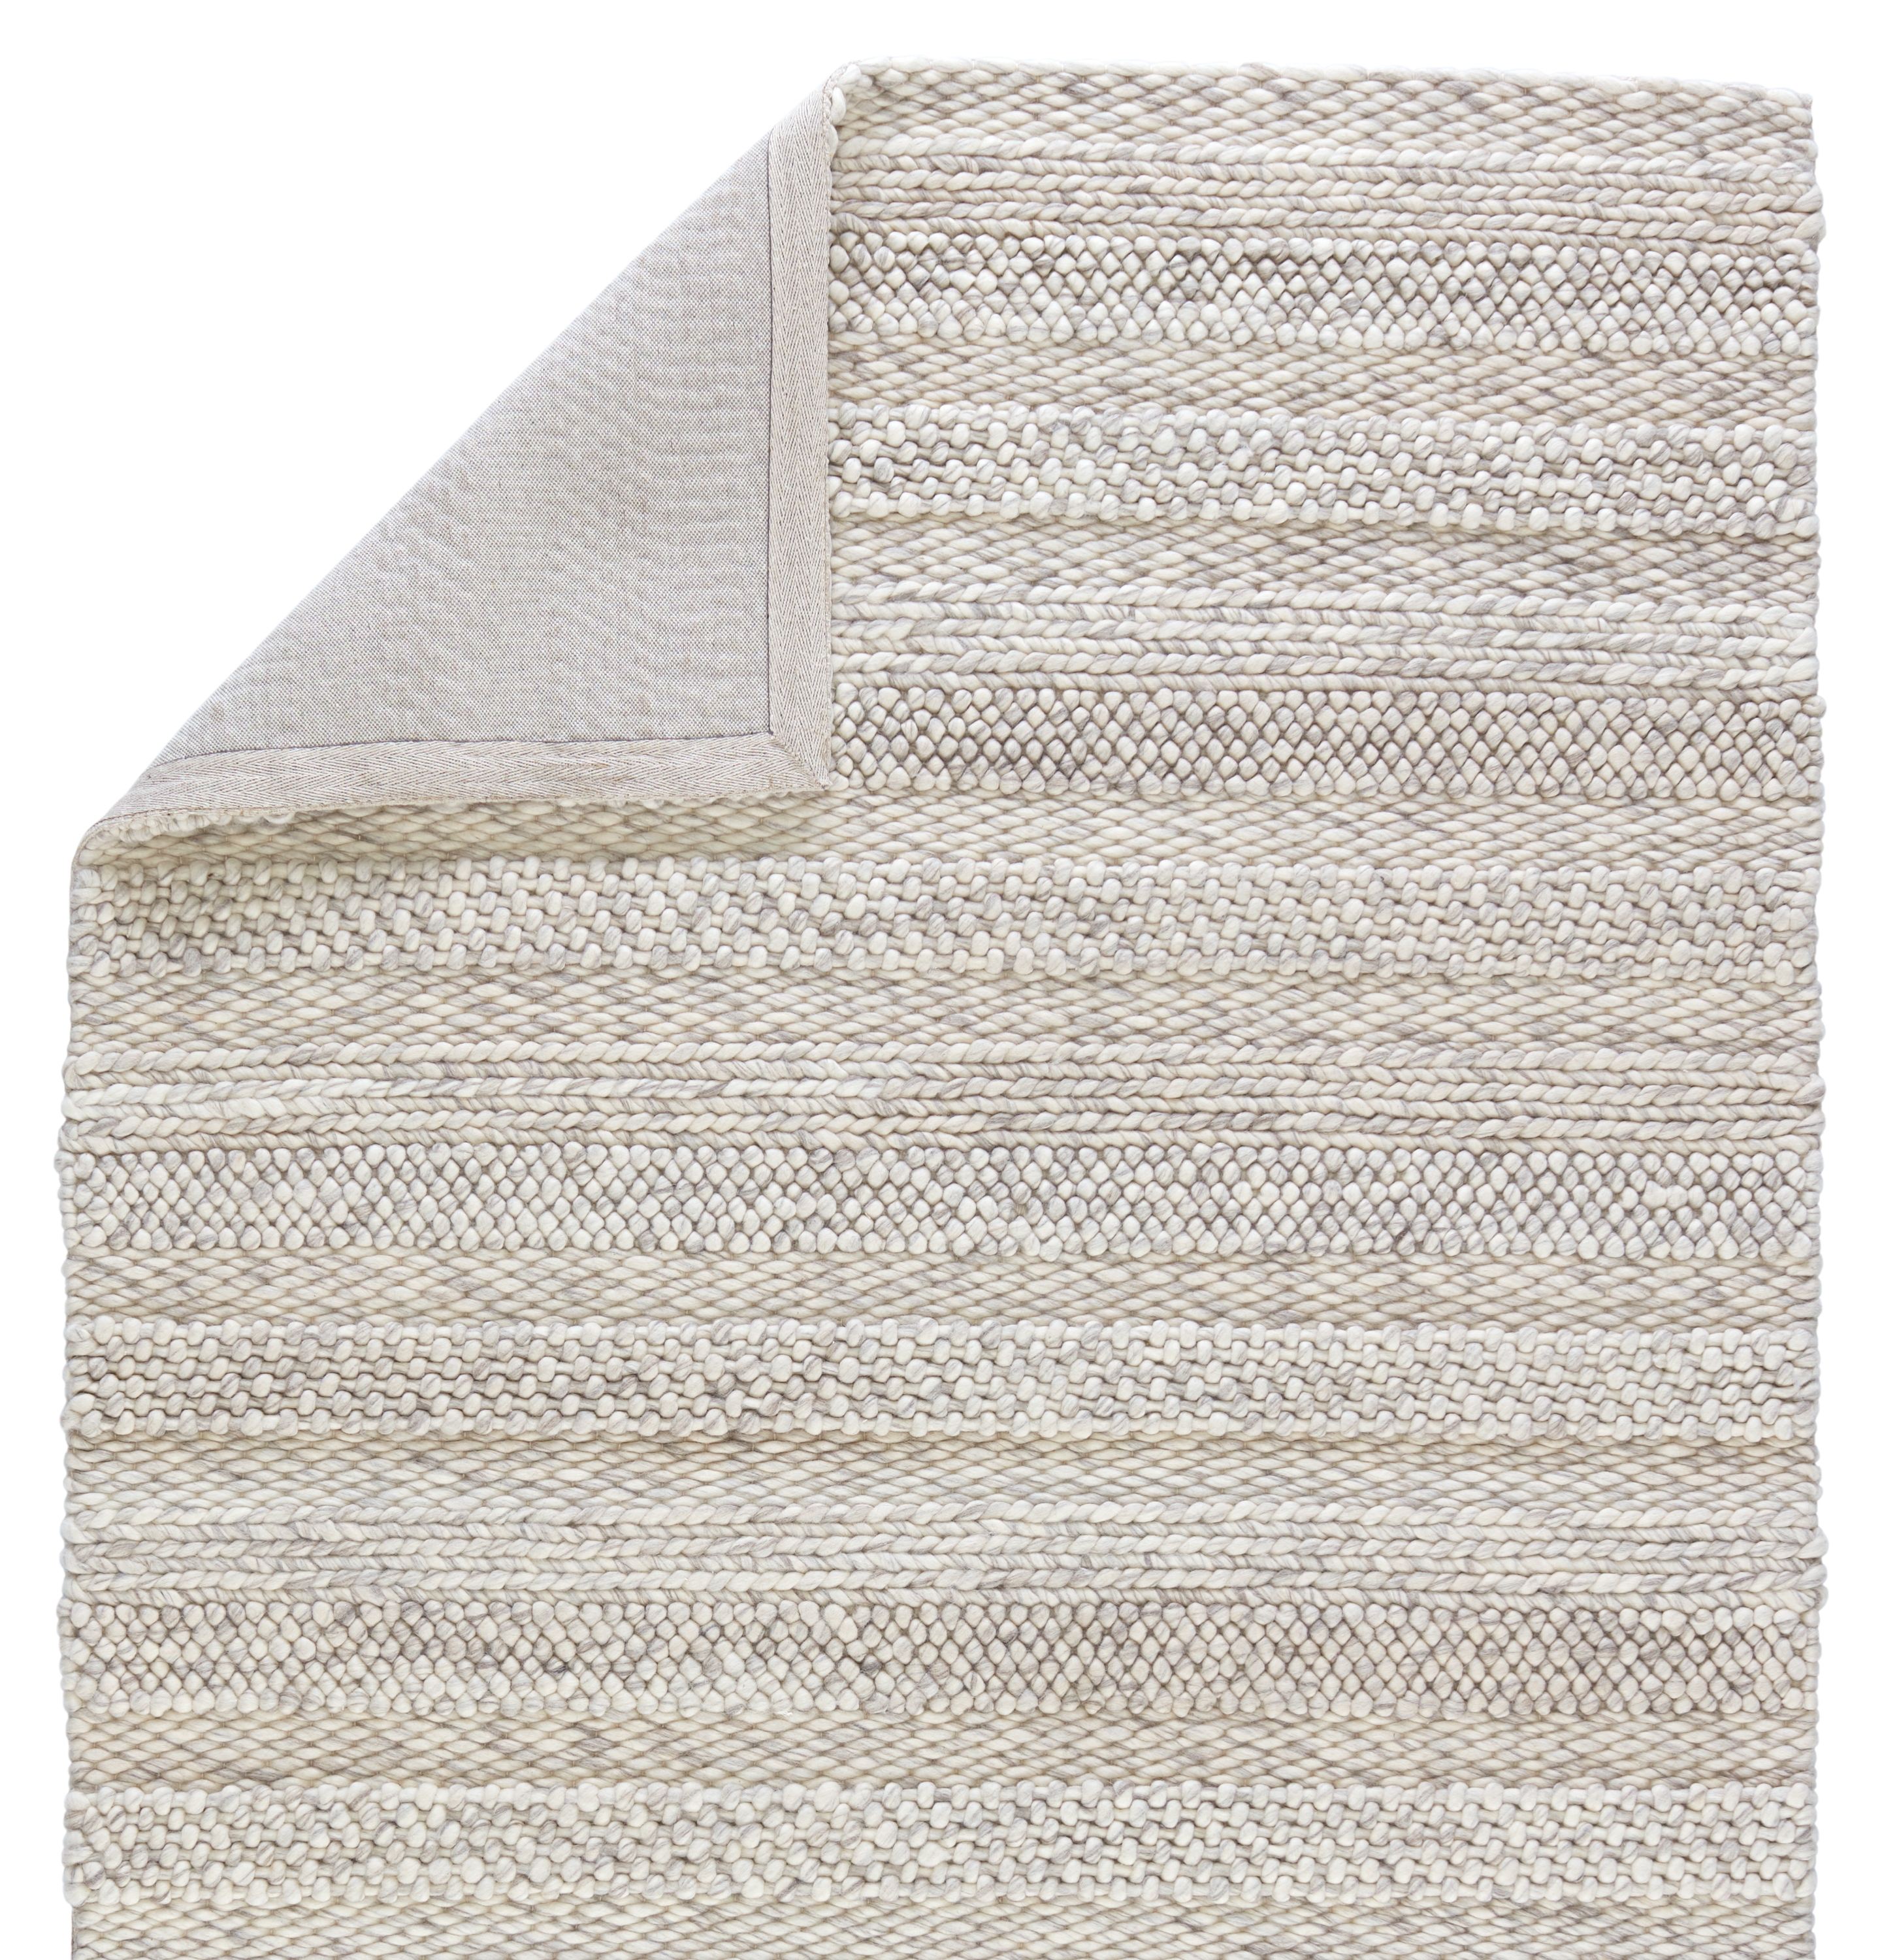 Lagom Handmade Solid Ivory/ Light Gray Area Rug (8'X10') - Image 2